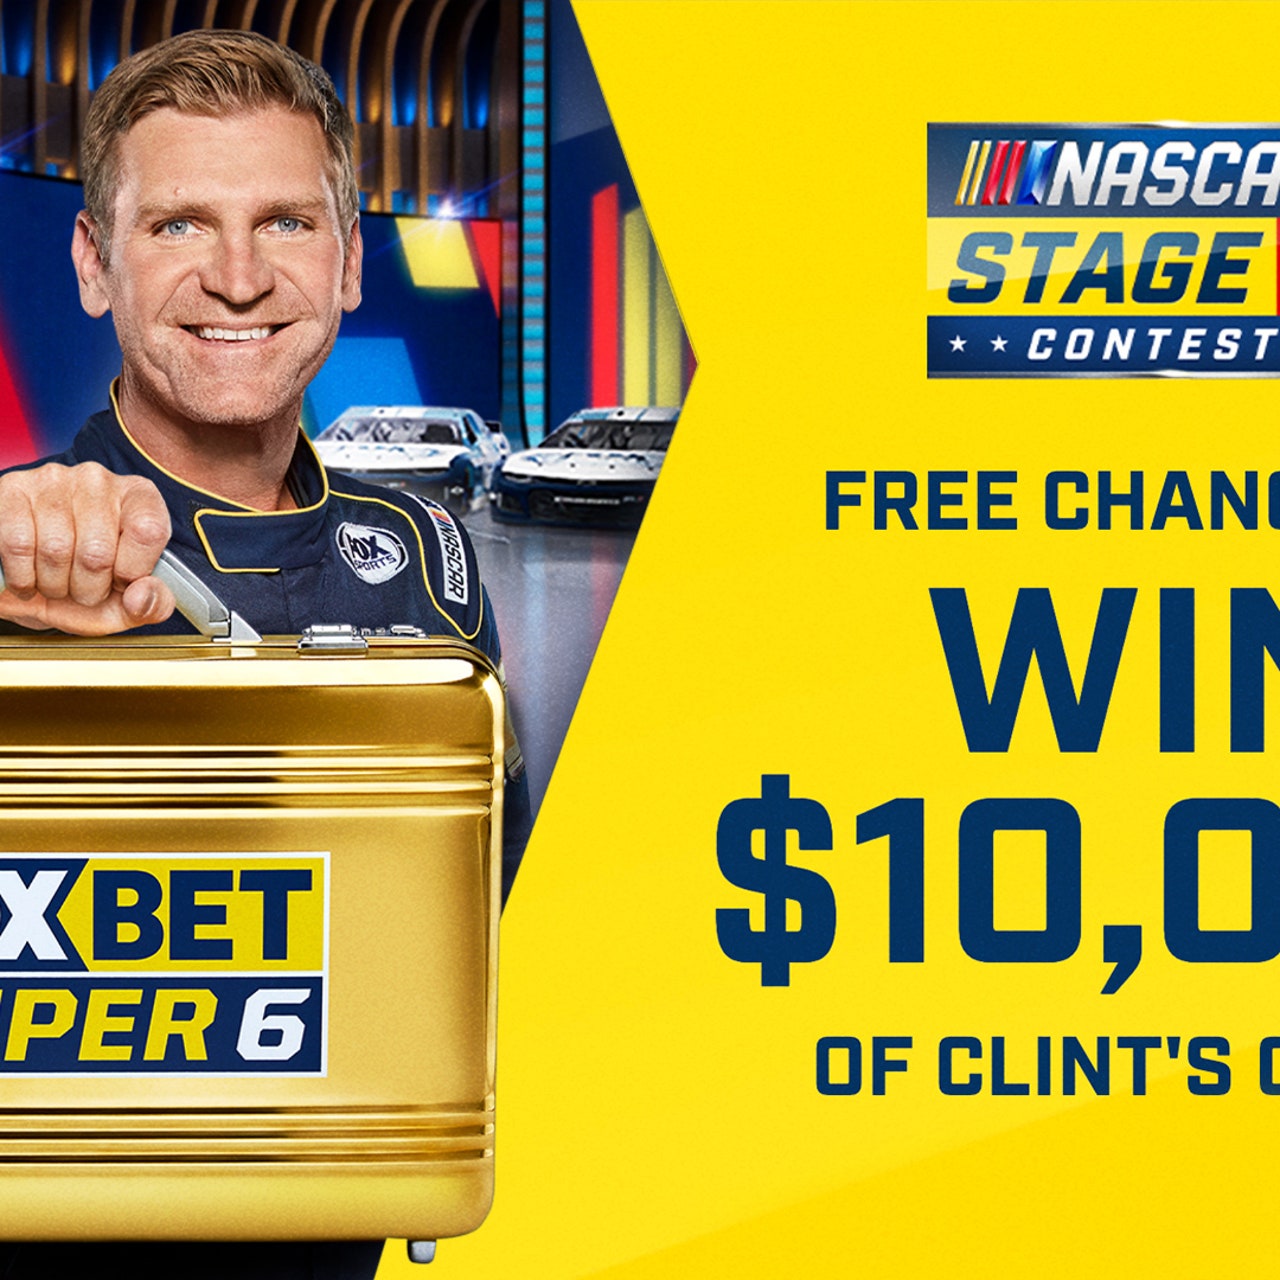 Cash in on Clint Bowyers $10K FOX Bet Super 6 Fontana NASCAR contest FOX Sports